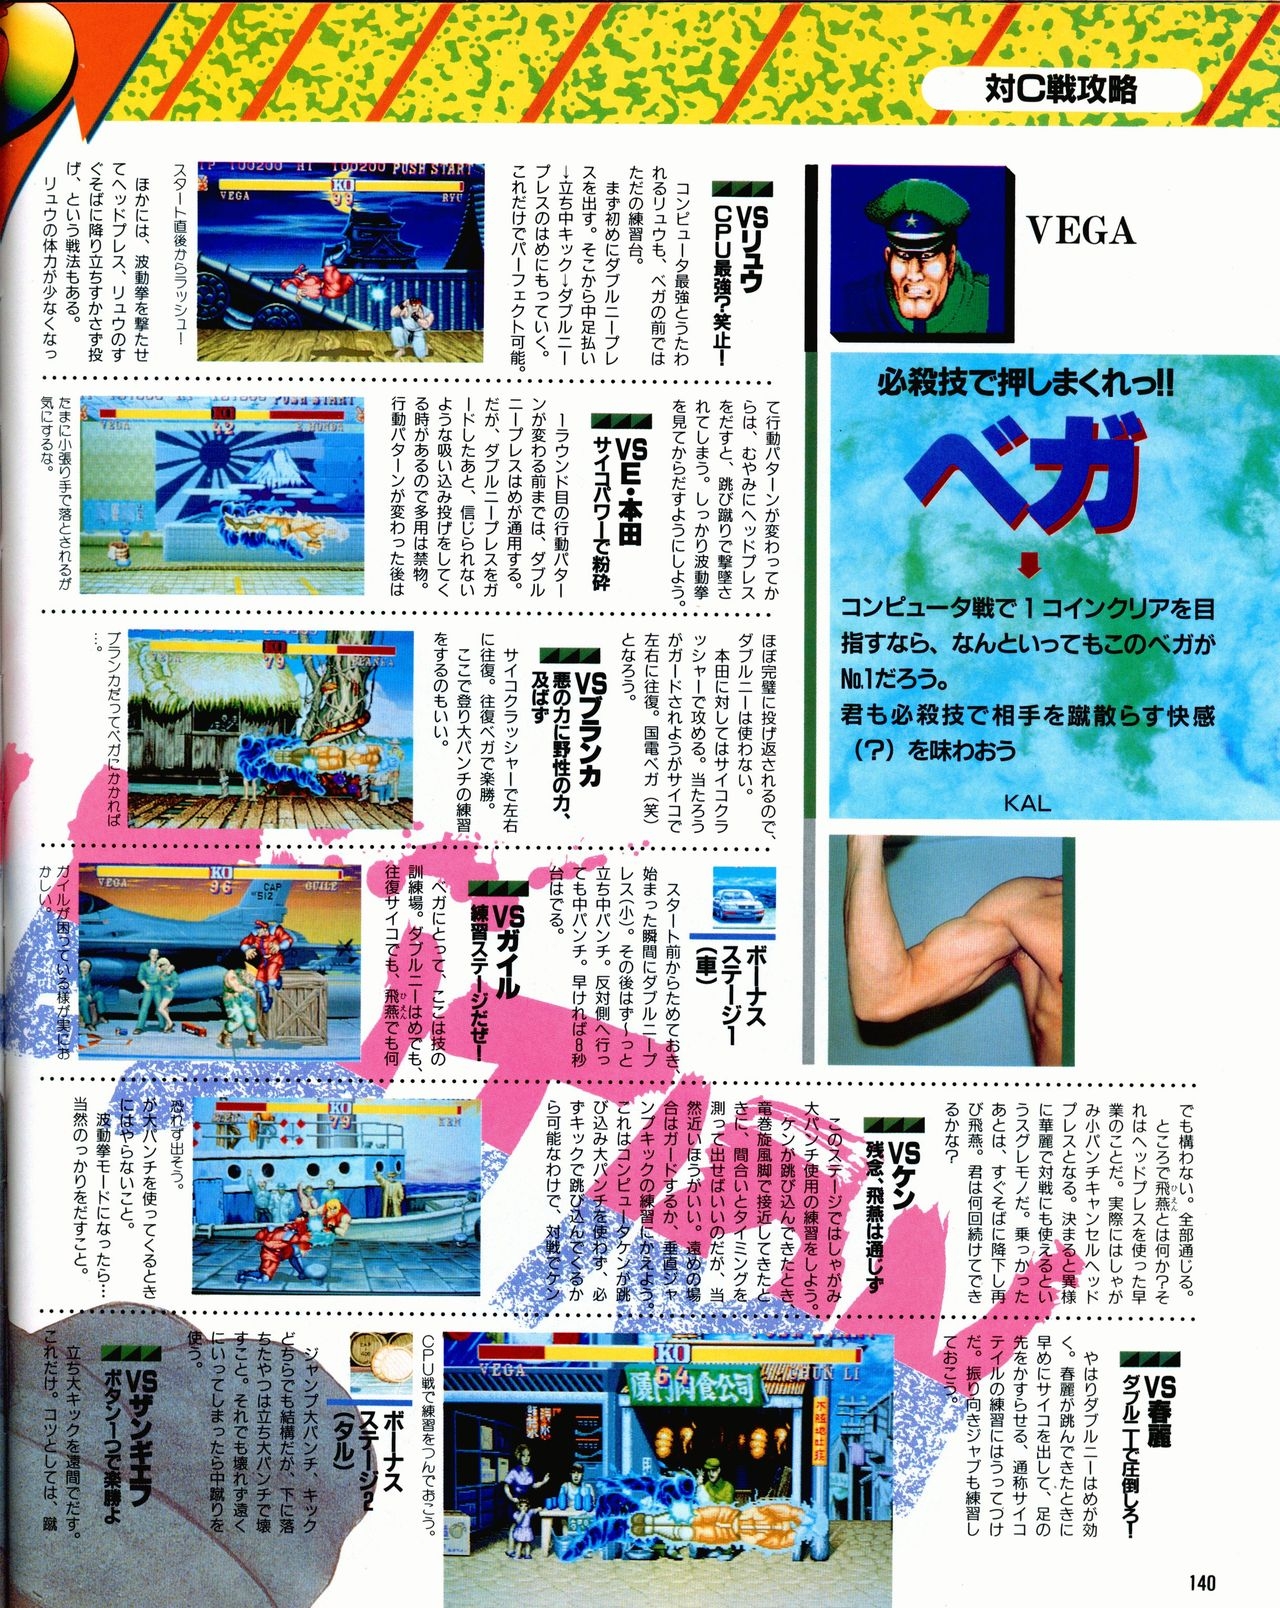 Street Fighter II Dash - Gamest special issue 77 141